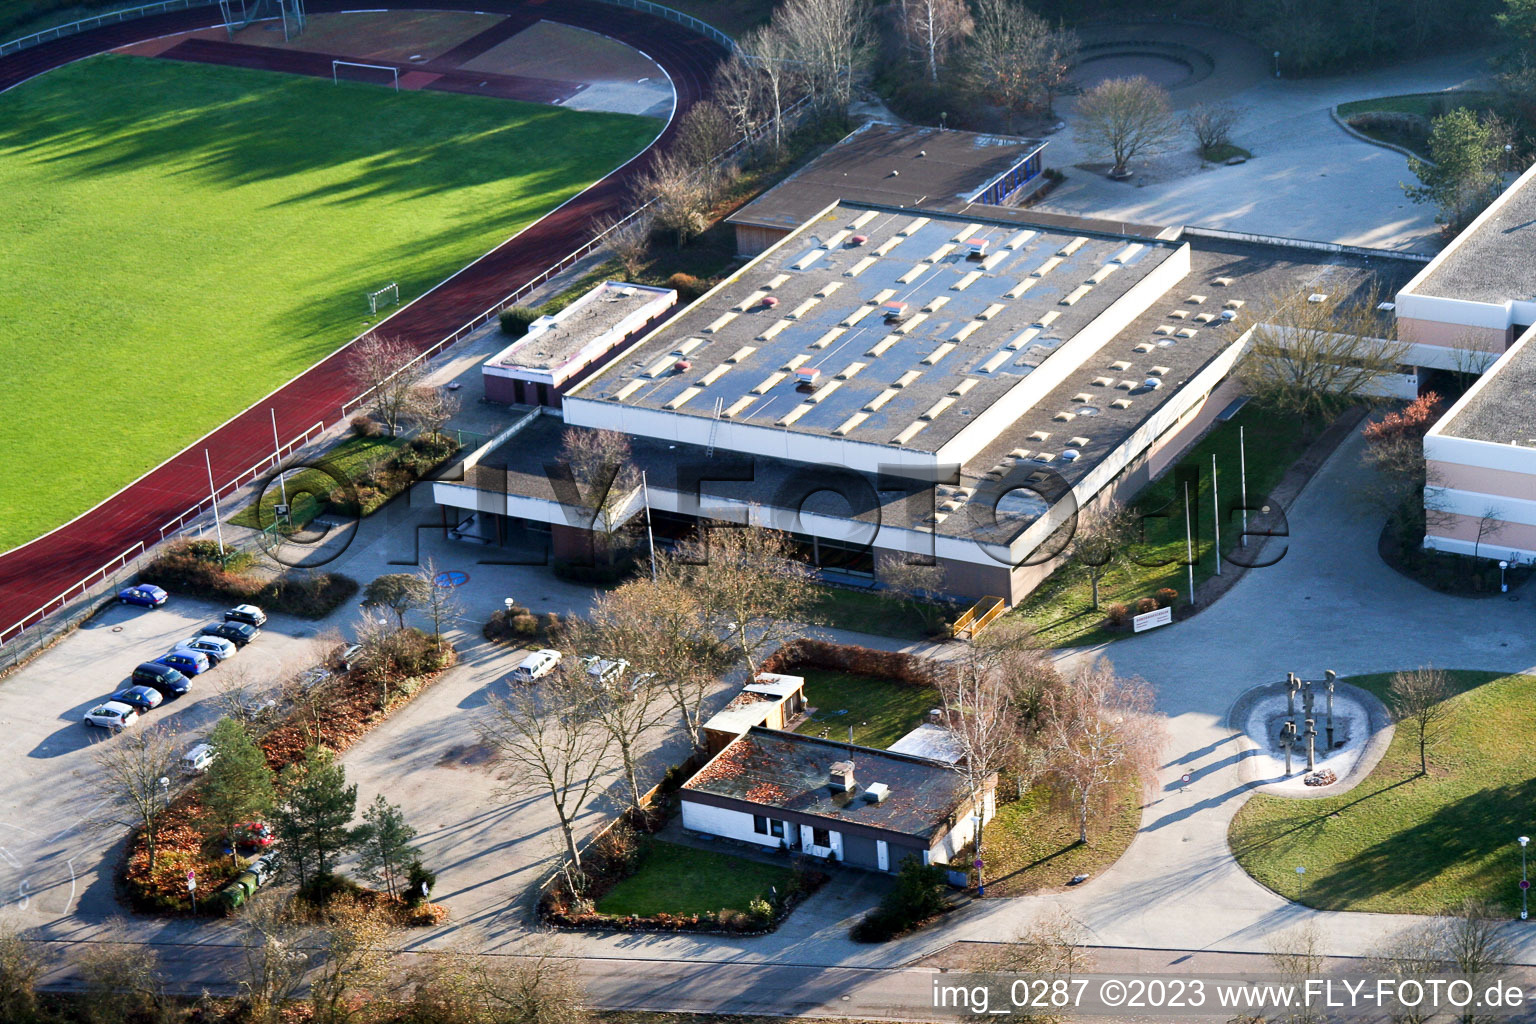 Aerial view of Roman bath school in Rheinzabern in the state Rhineland-Palatinate, Germany